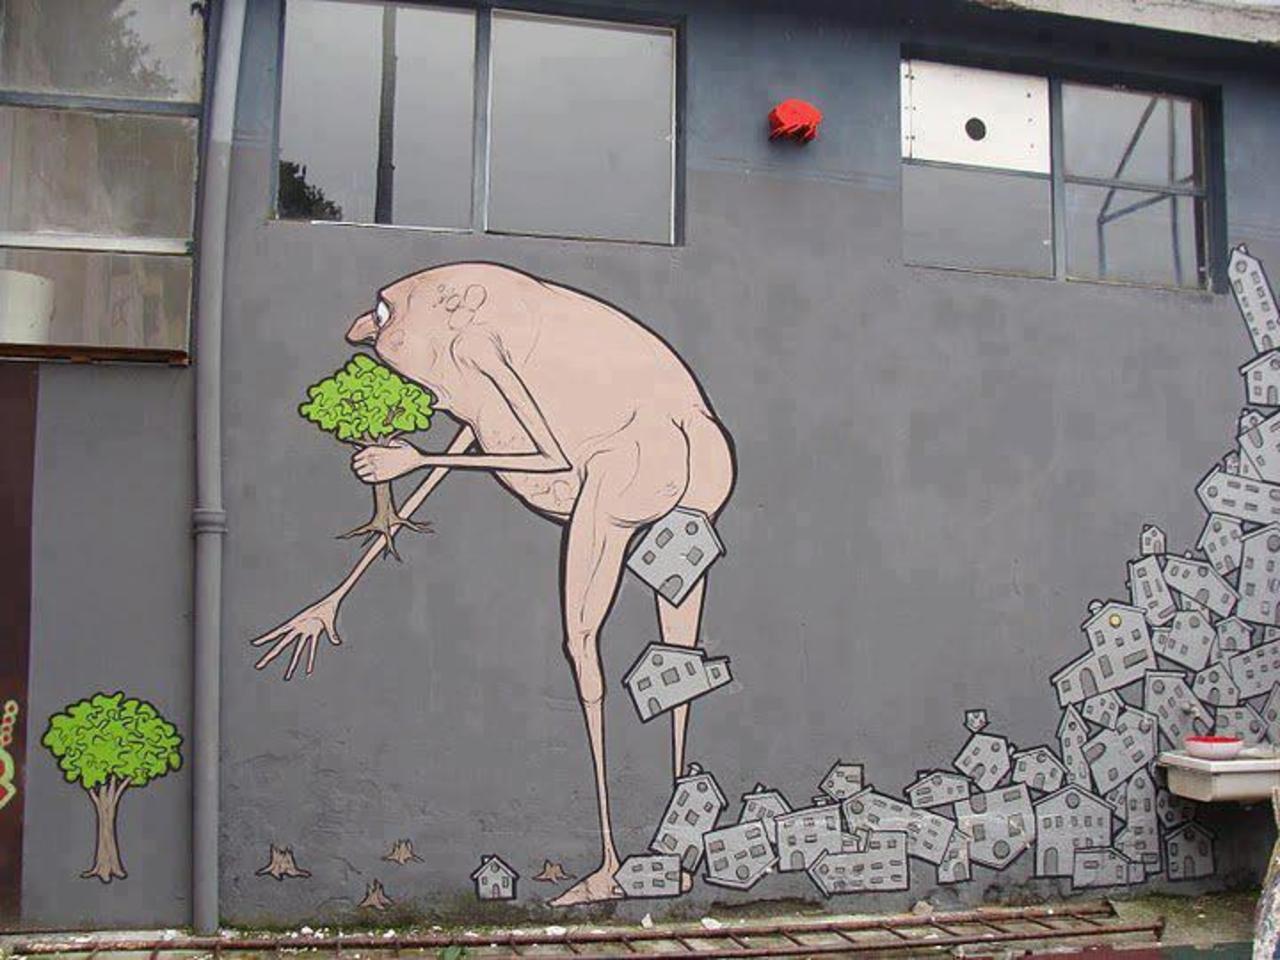 Streetart By NemO's in Milano, Italy

#streetart #urbanart #mural #art #graffiti http://t.co/QavmQUALfL